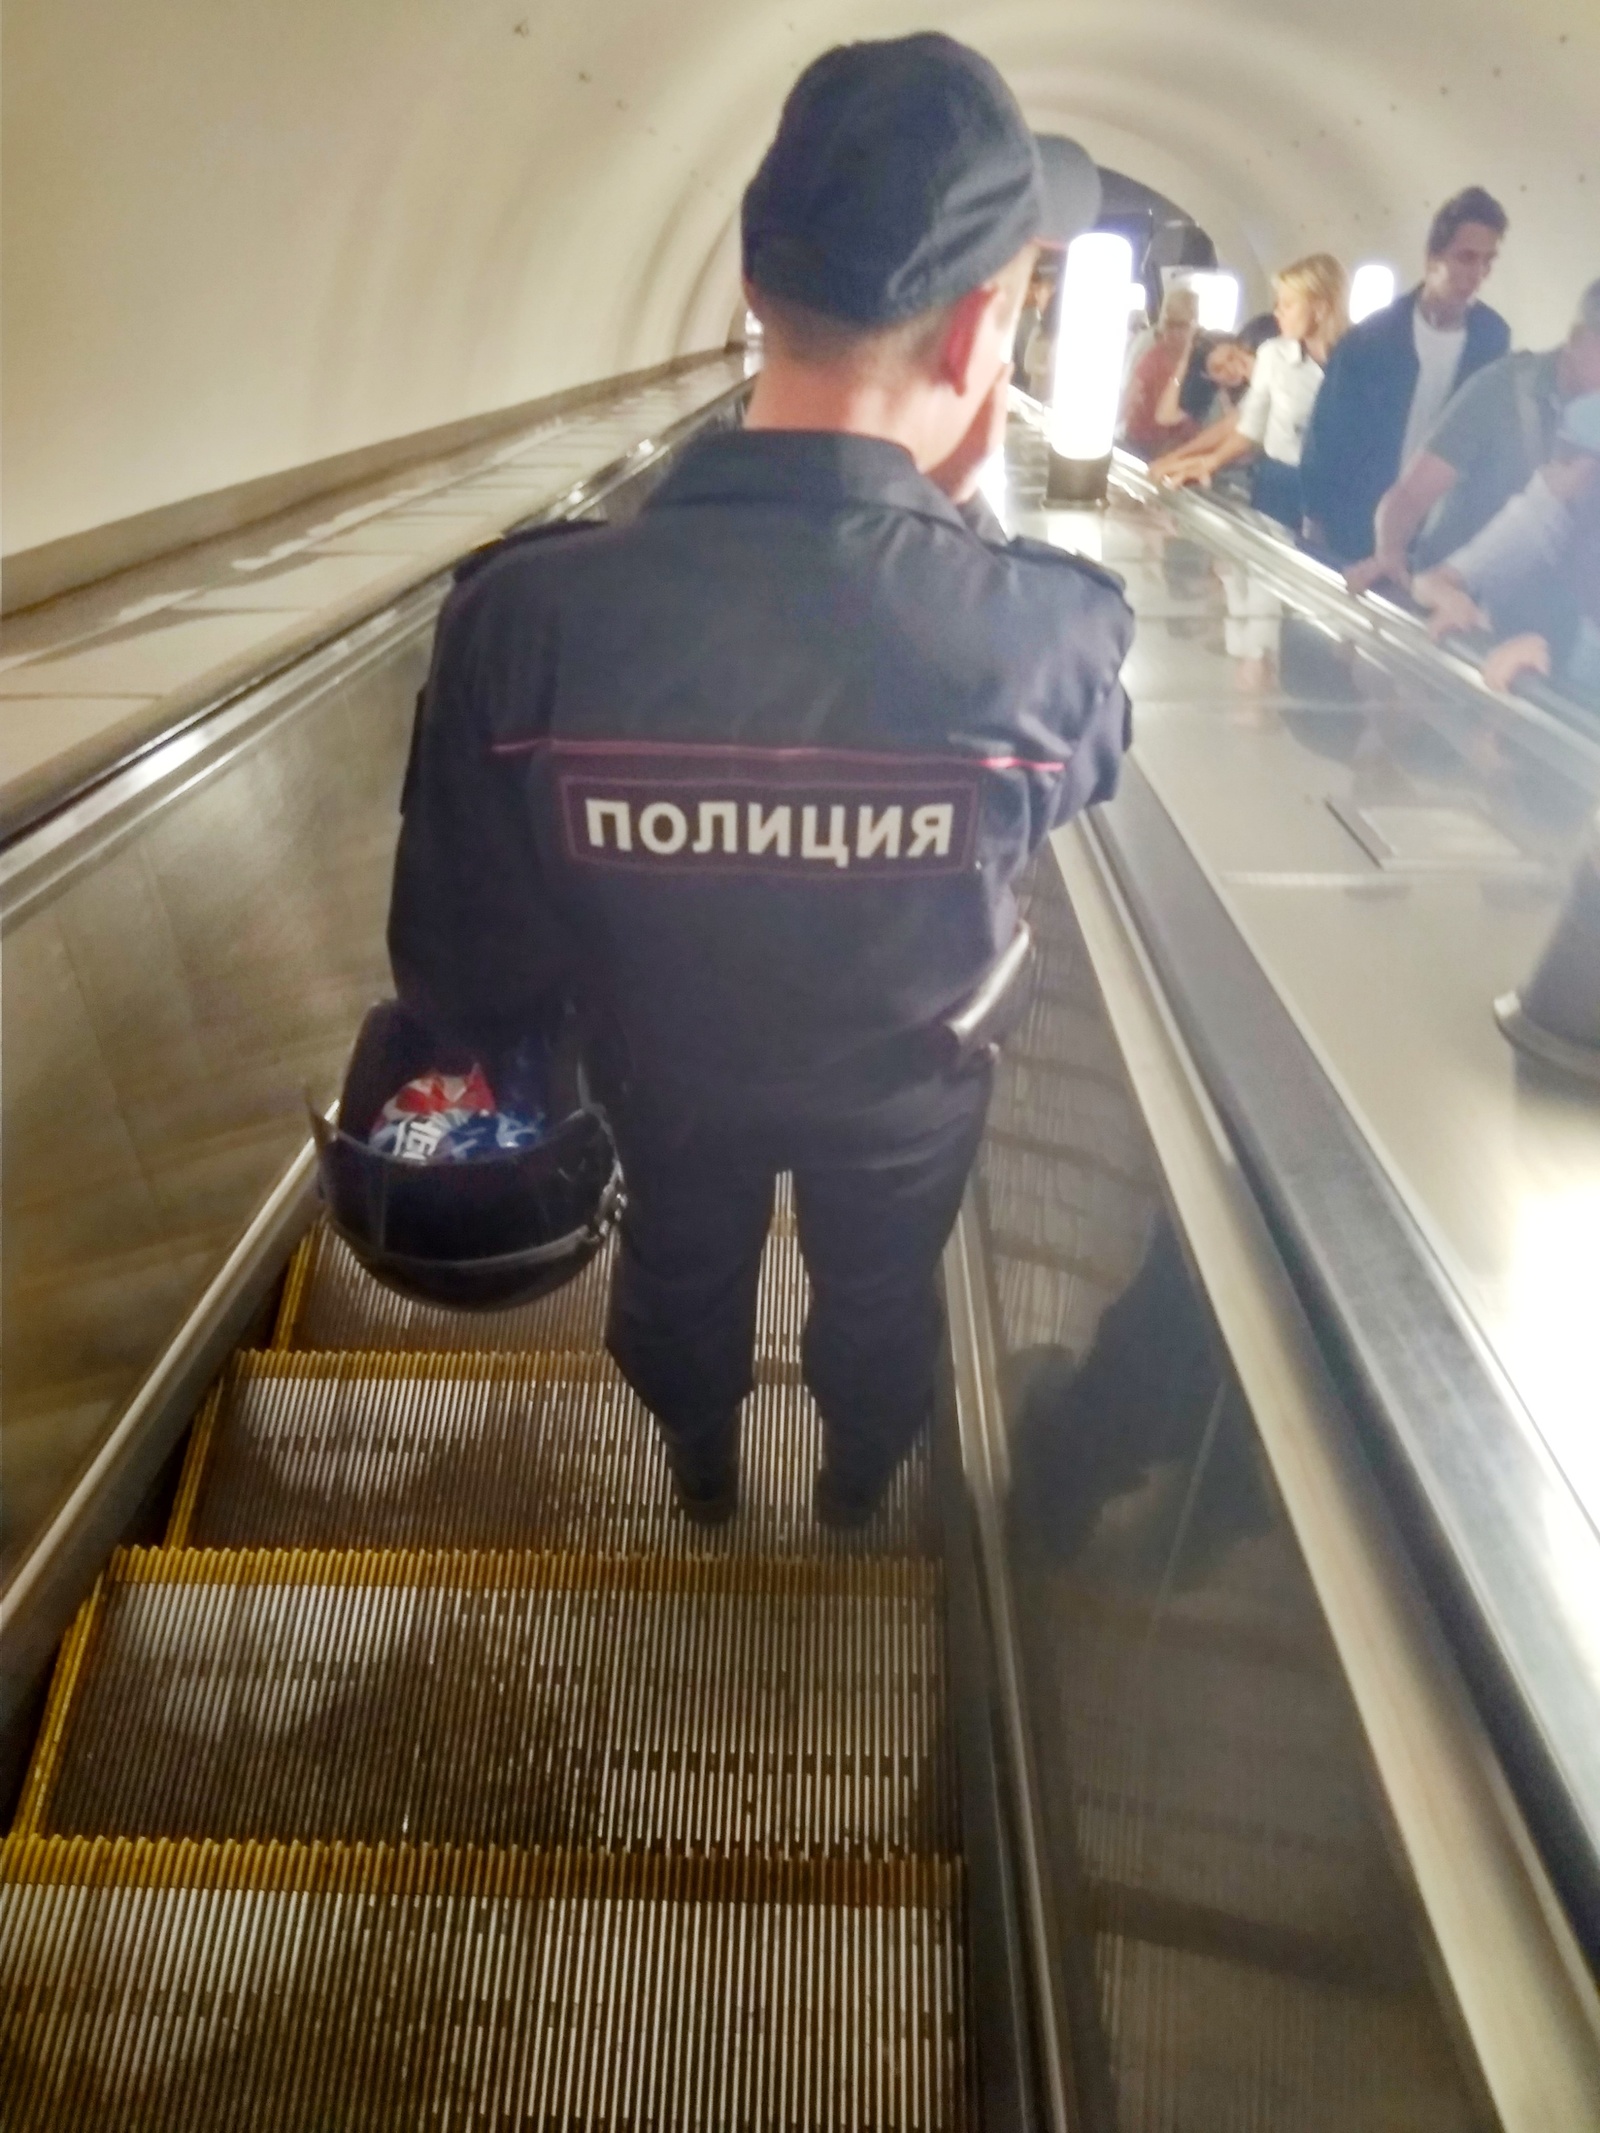 полиция метрополитена москвы